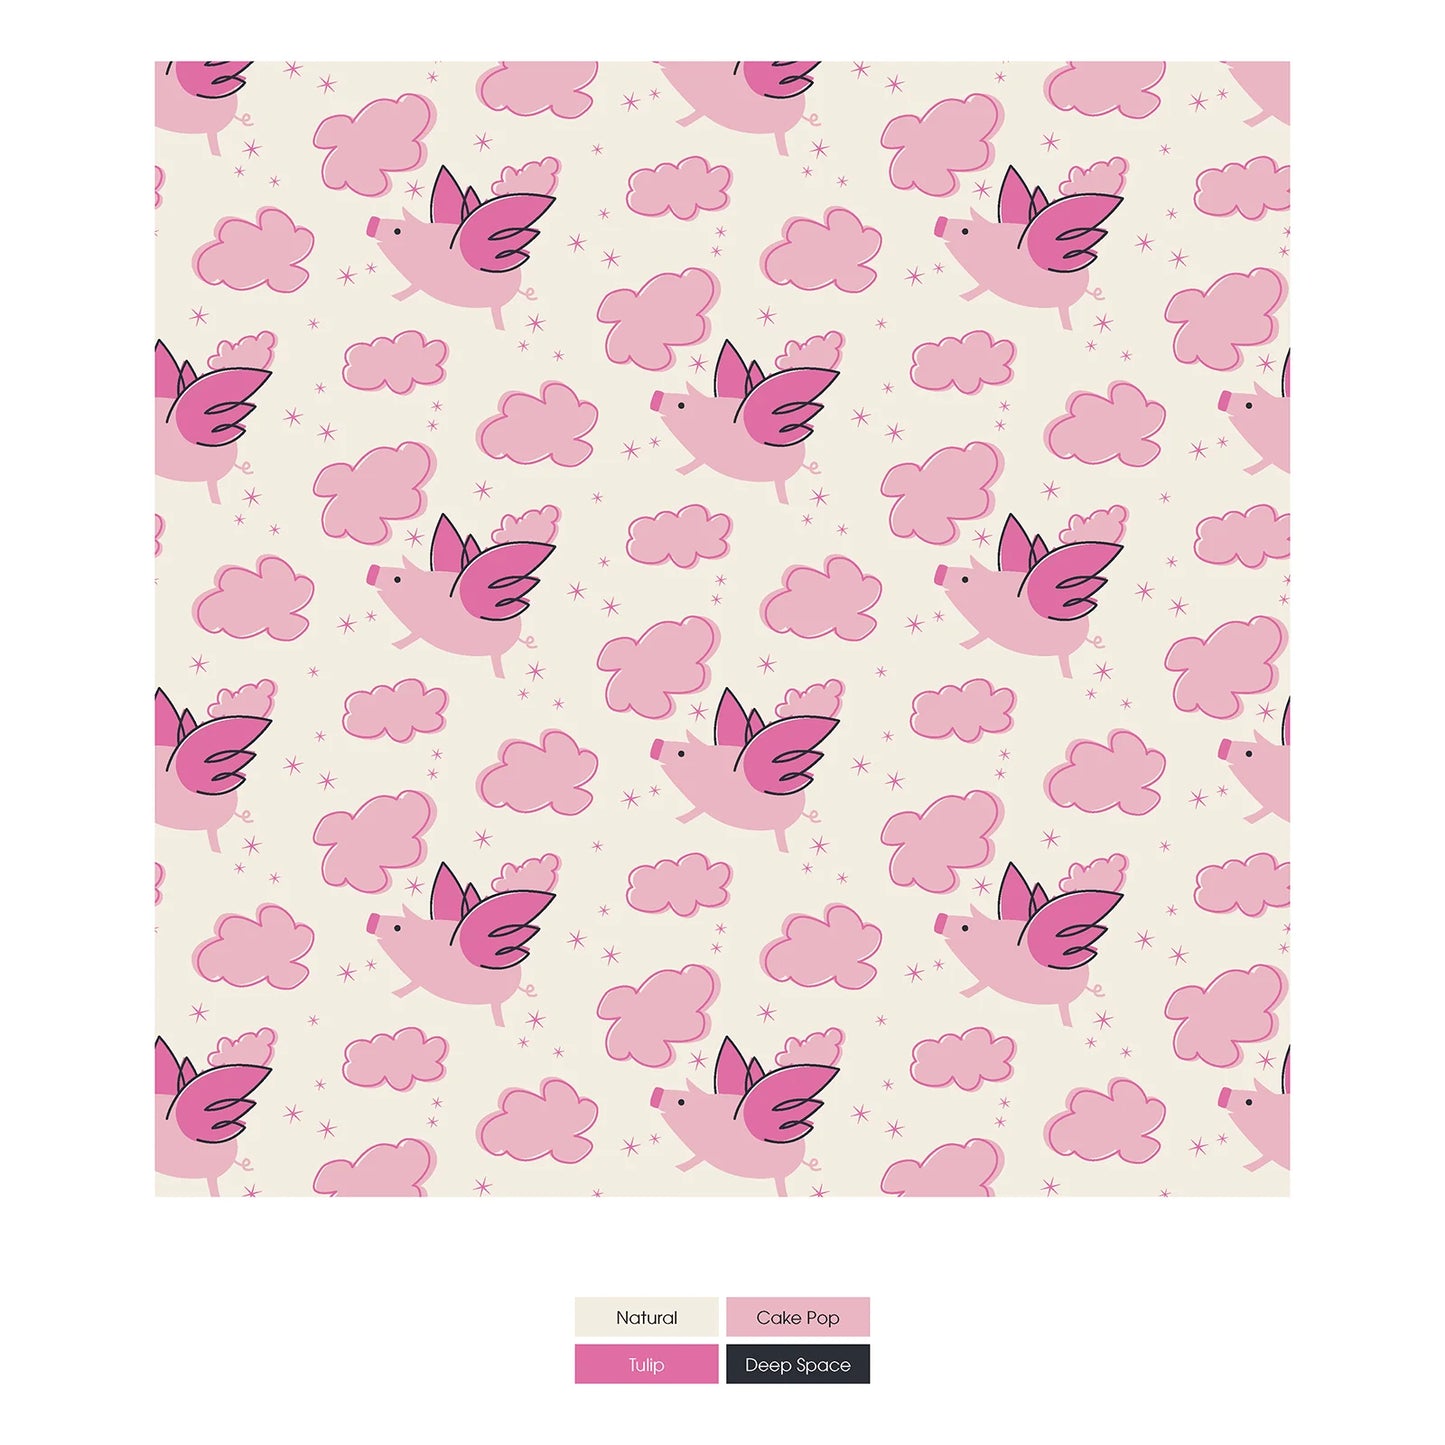 Kickee Natural Flying Pigs | Print Ruffle Toddler Blanket